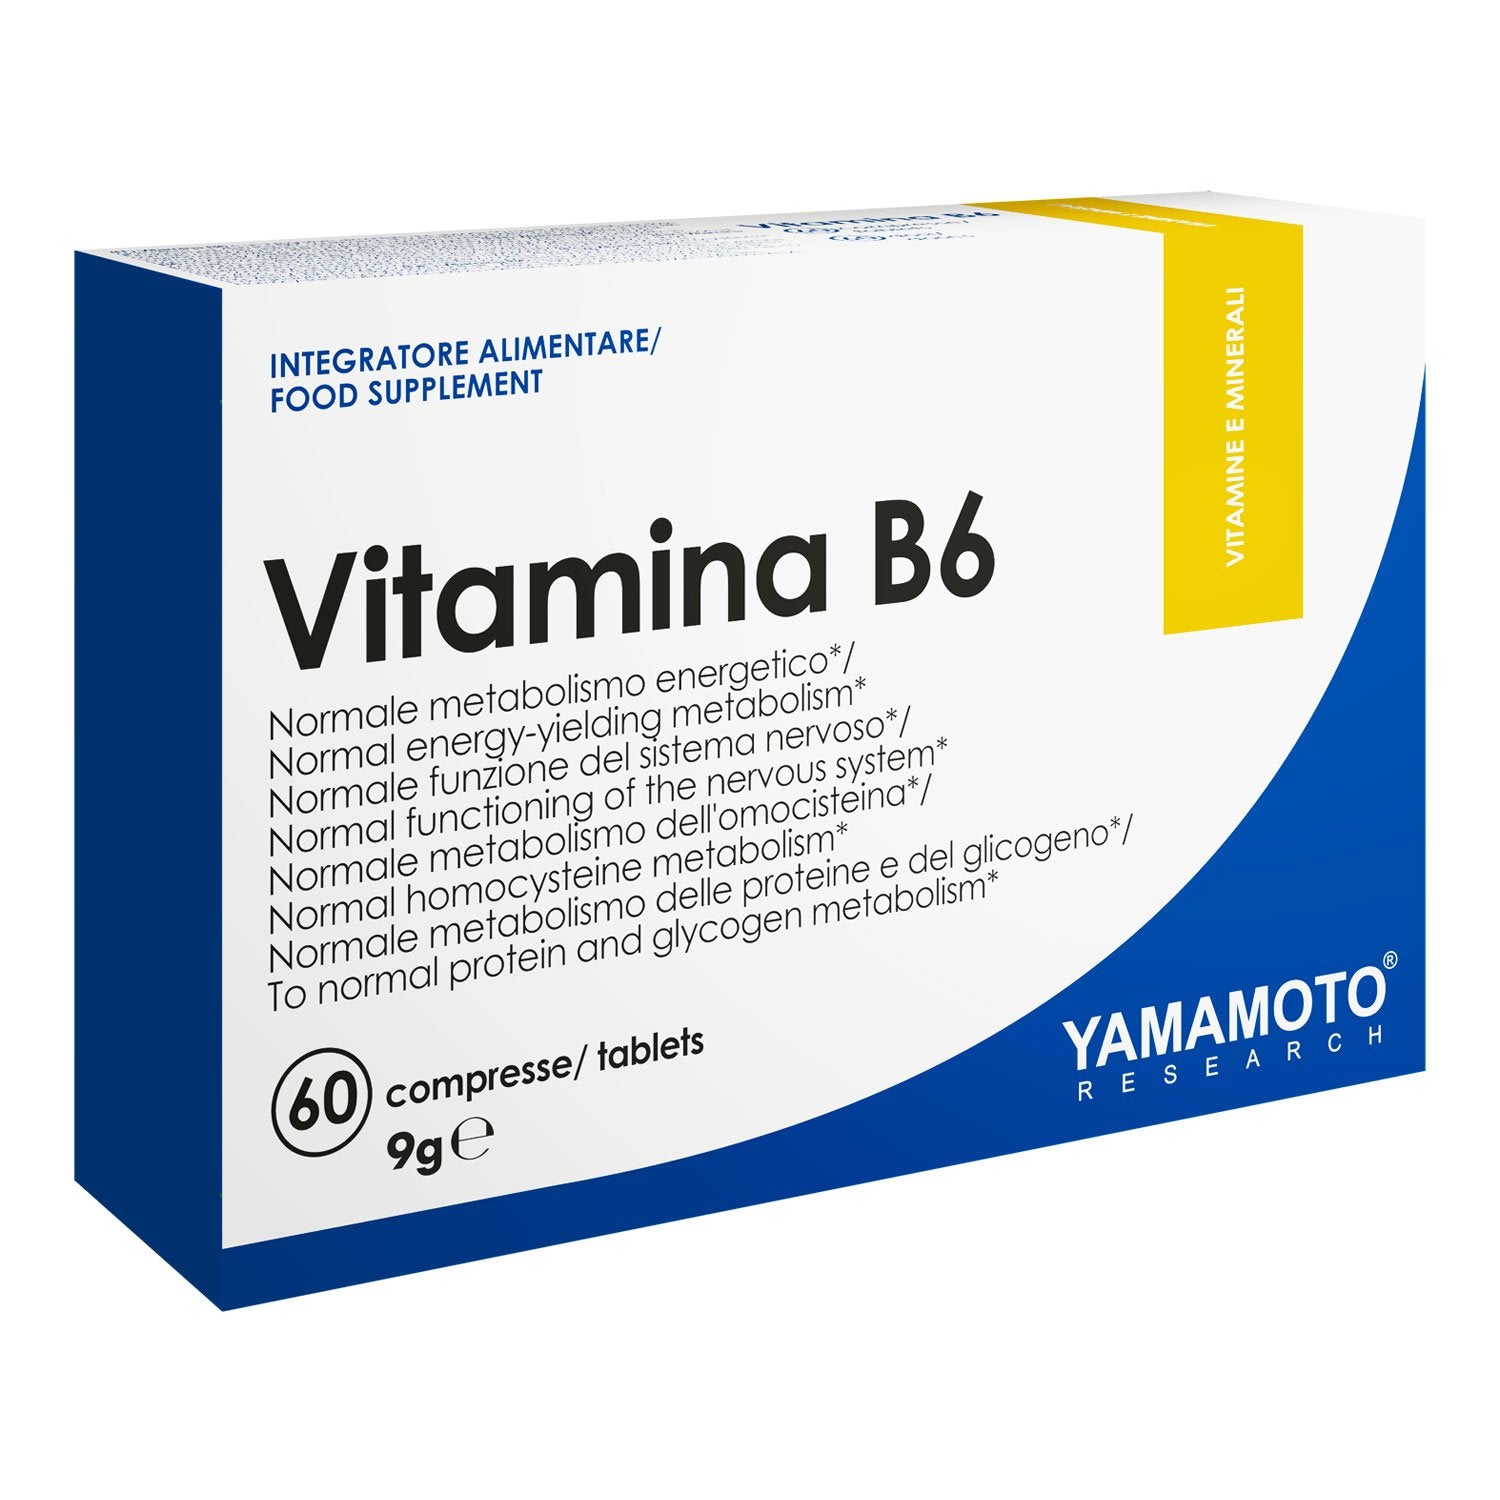 Vitamina B6 - 60 cpr - YAMAMOTO RESEARCH - Parafarmacia PHARMAGOLI